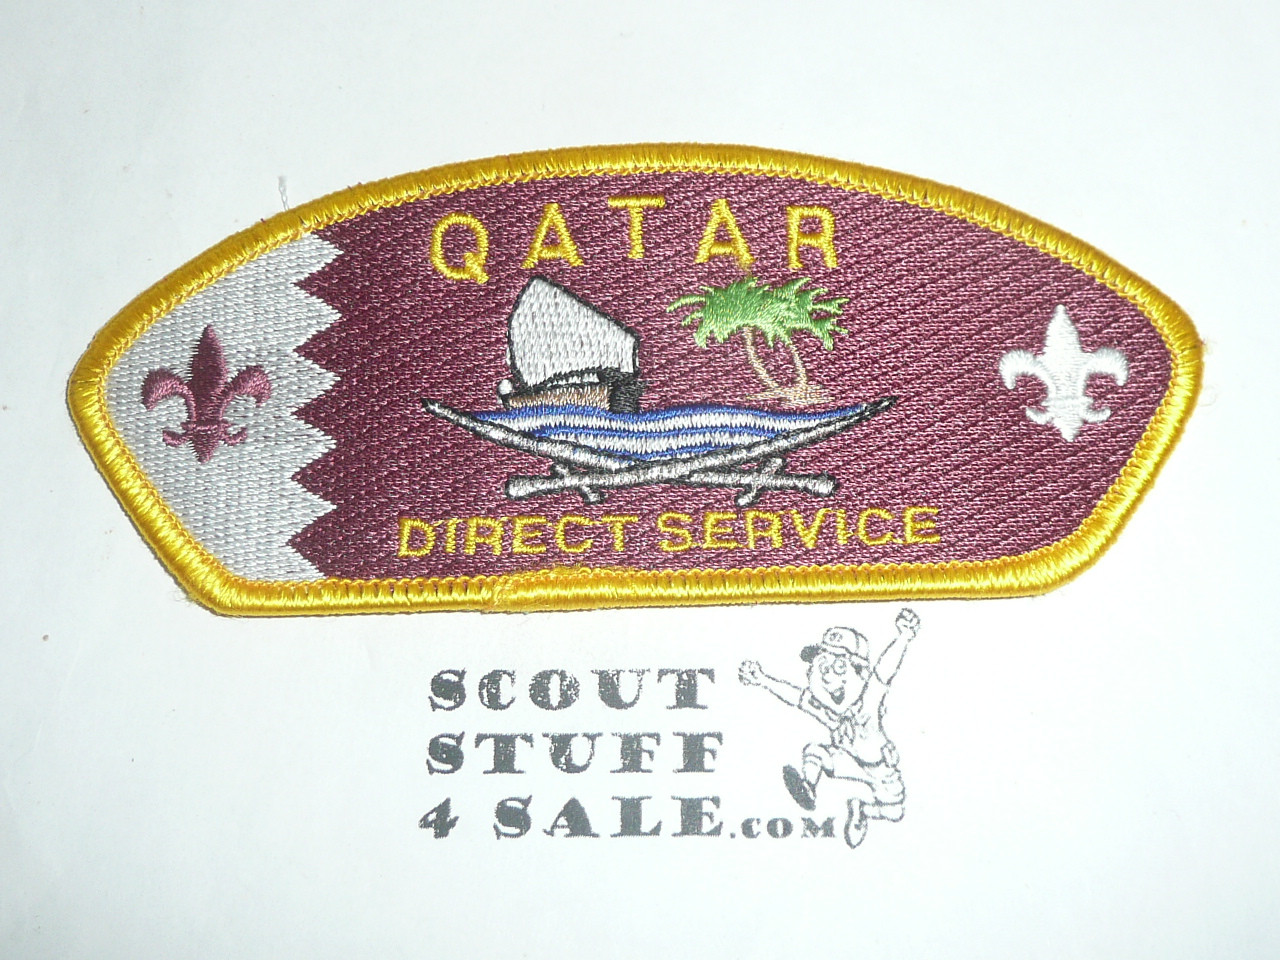 Direct Service Council QATAR s1b CSP - Scout